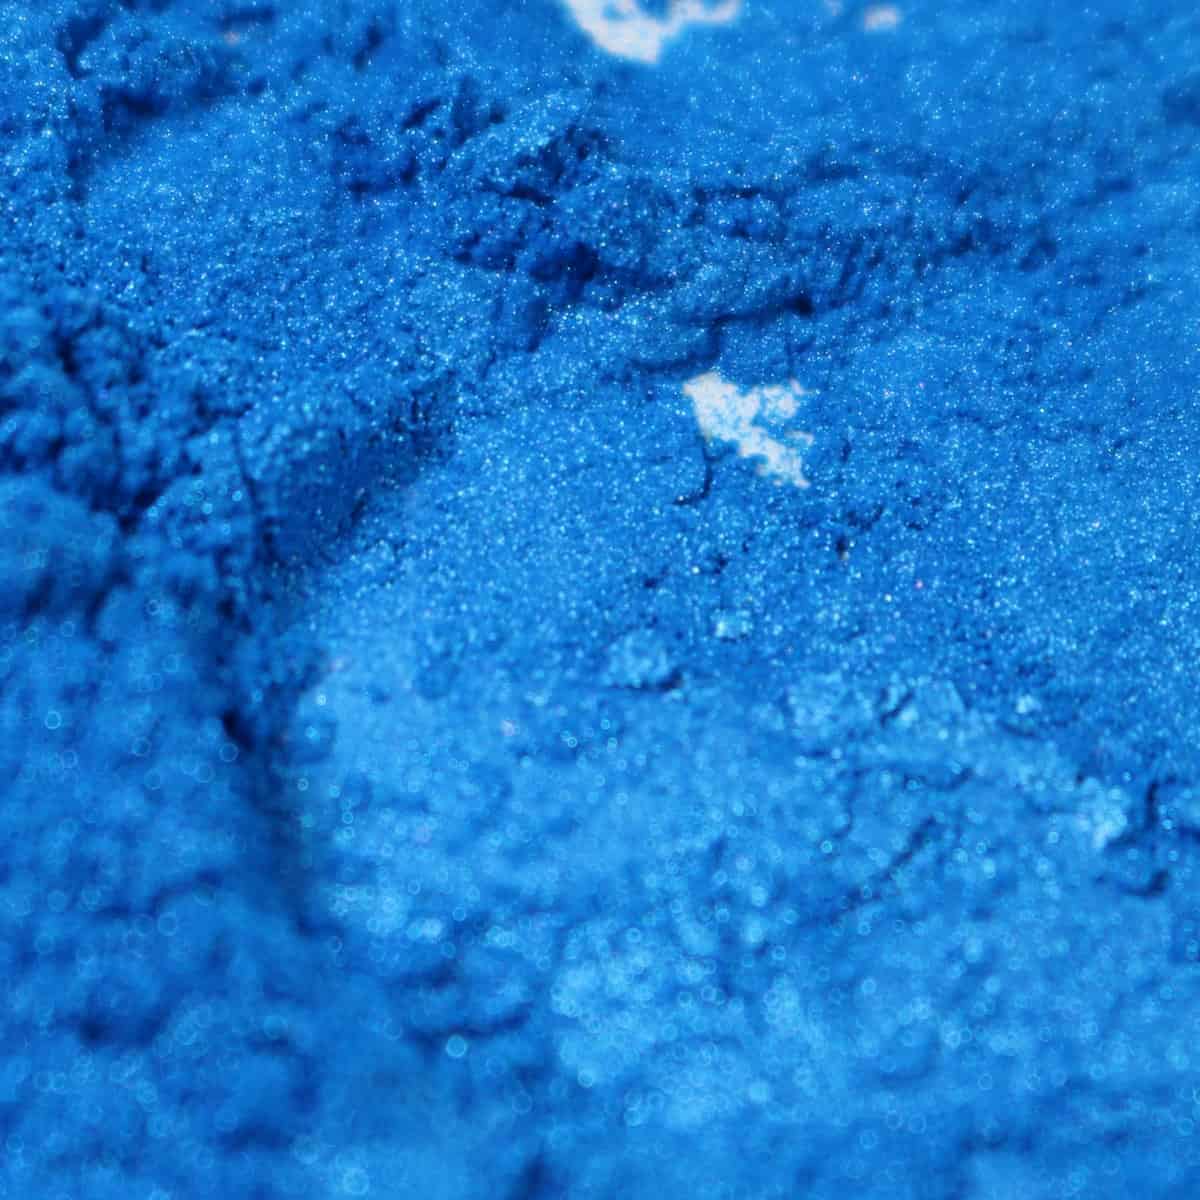 Blue mica pigment powder